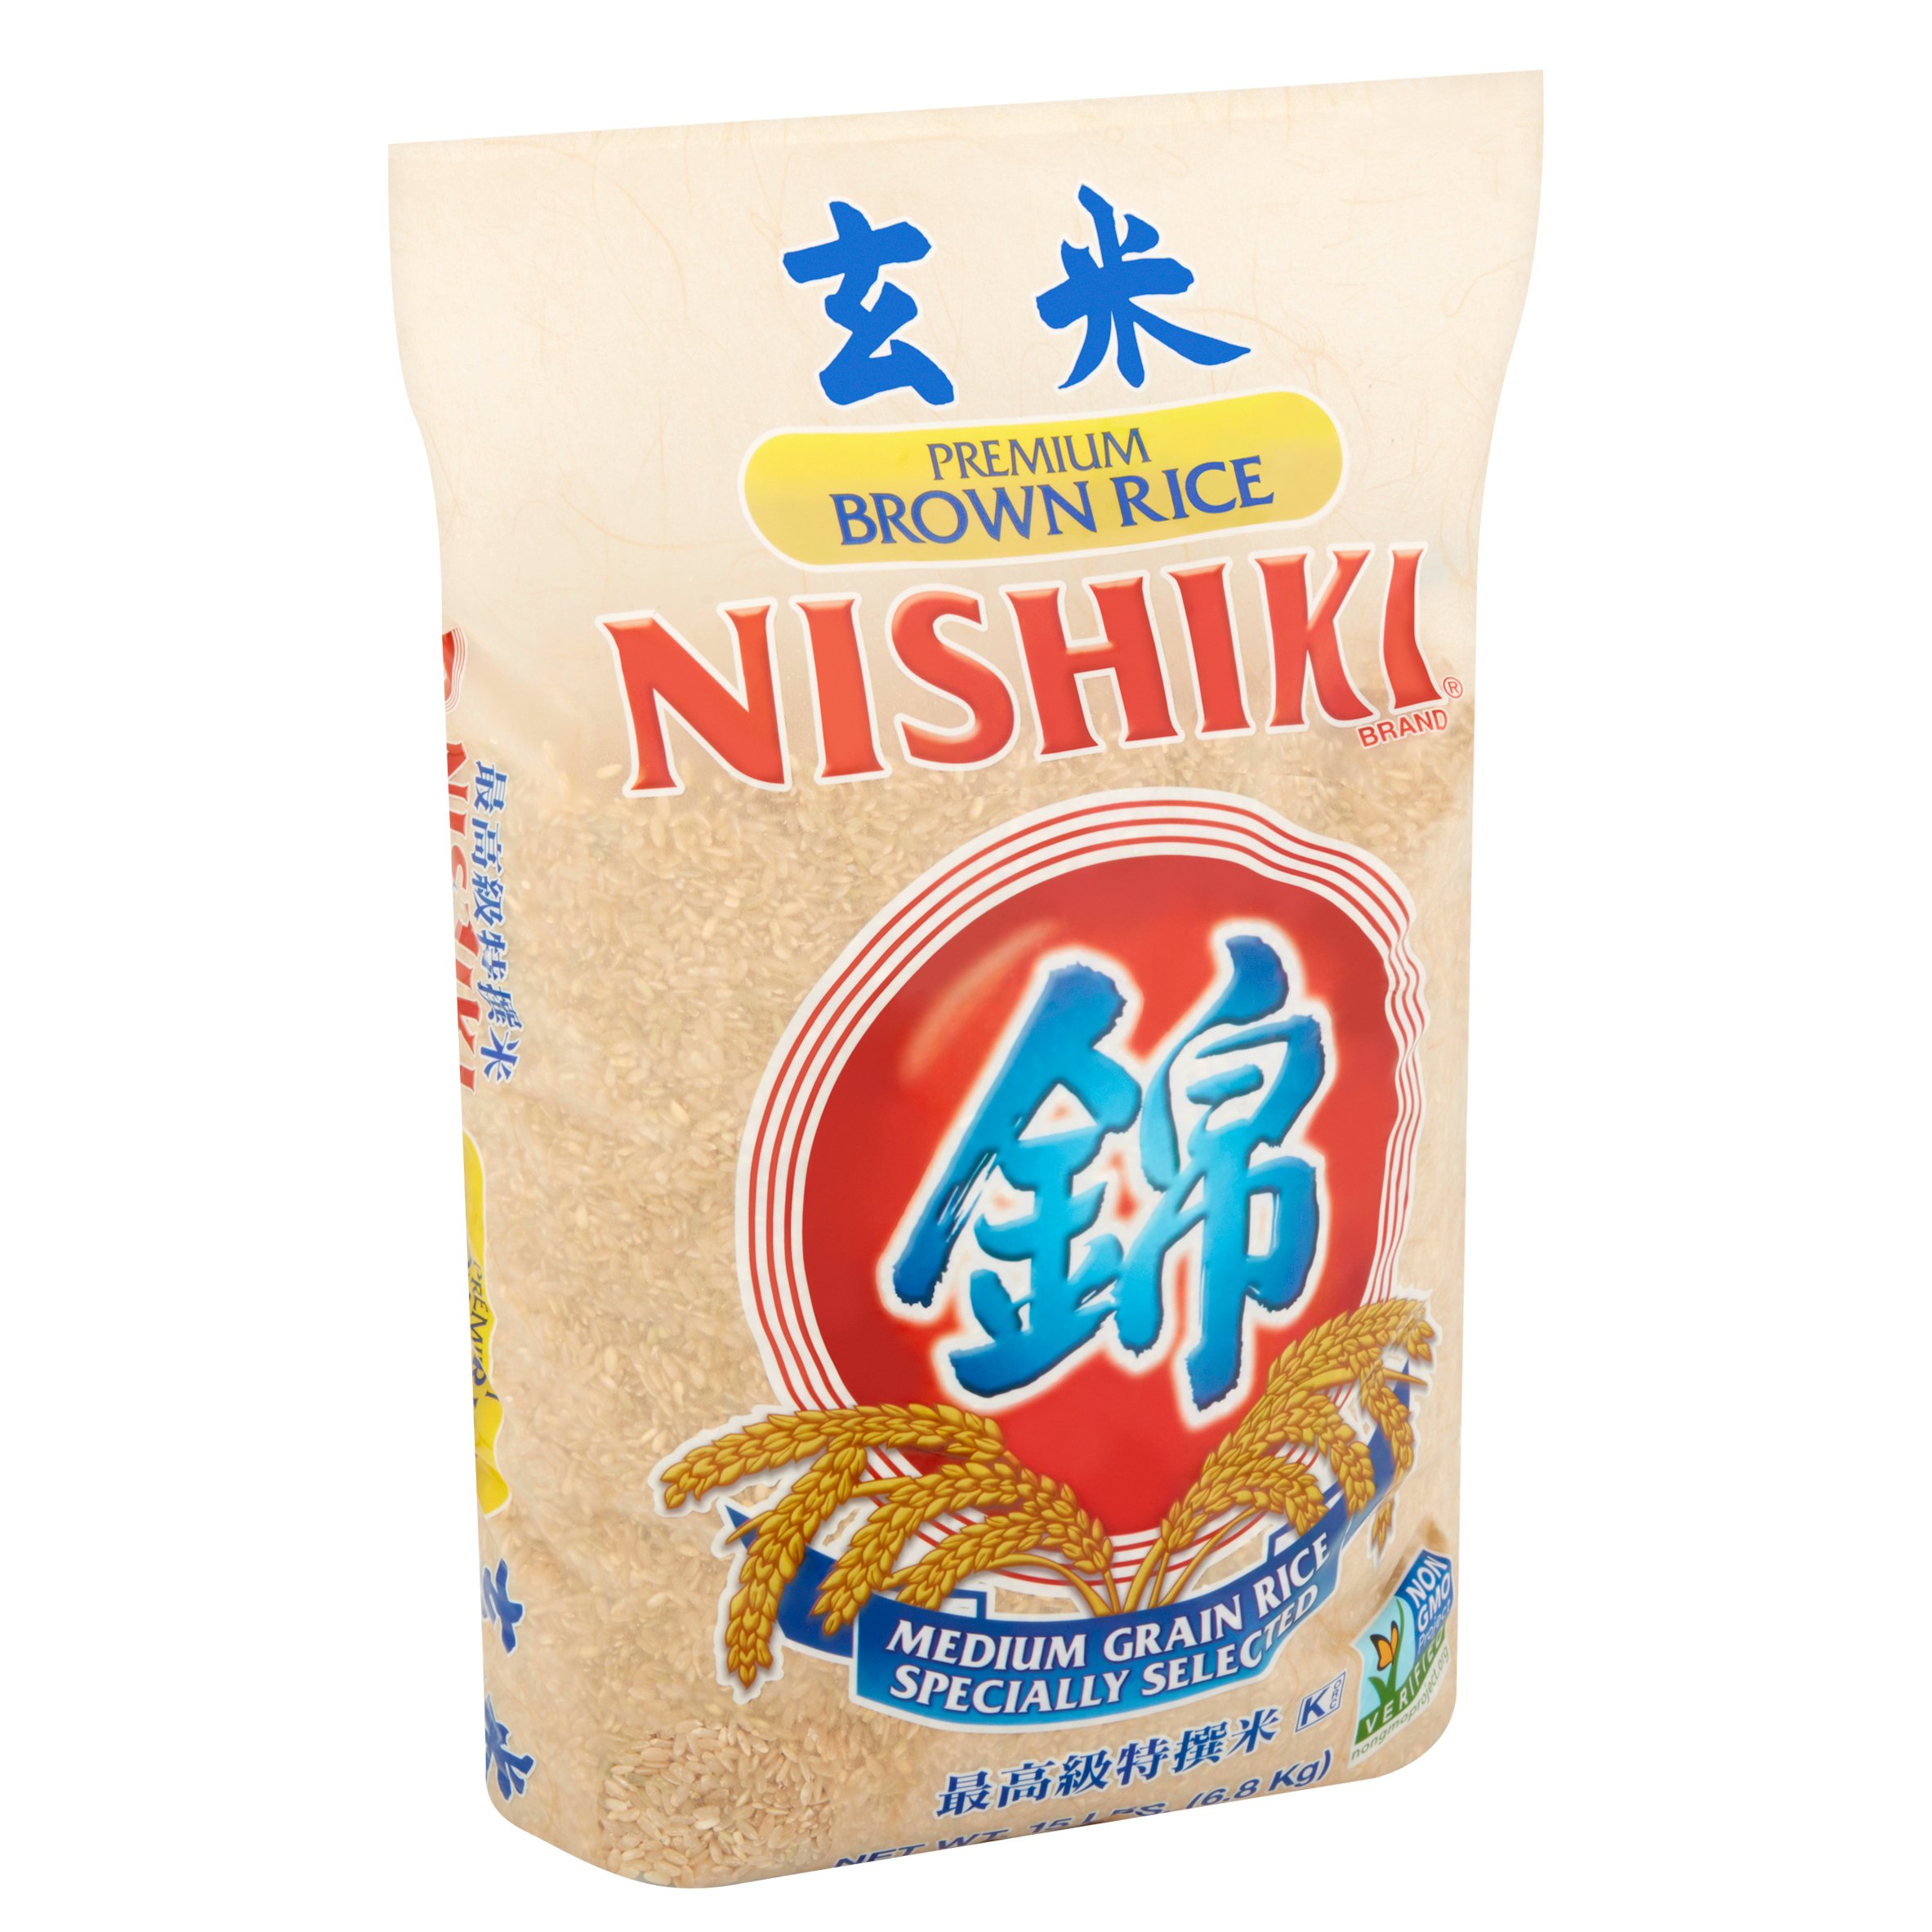 Nishiki Premium Brown Rice, 15 lb - image 2 of 5